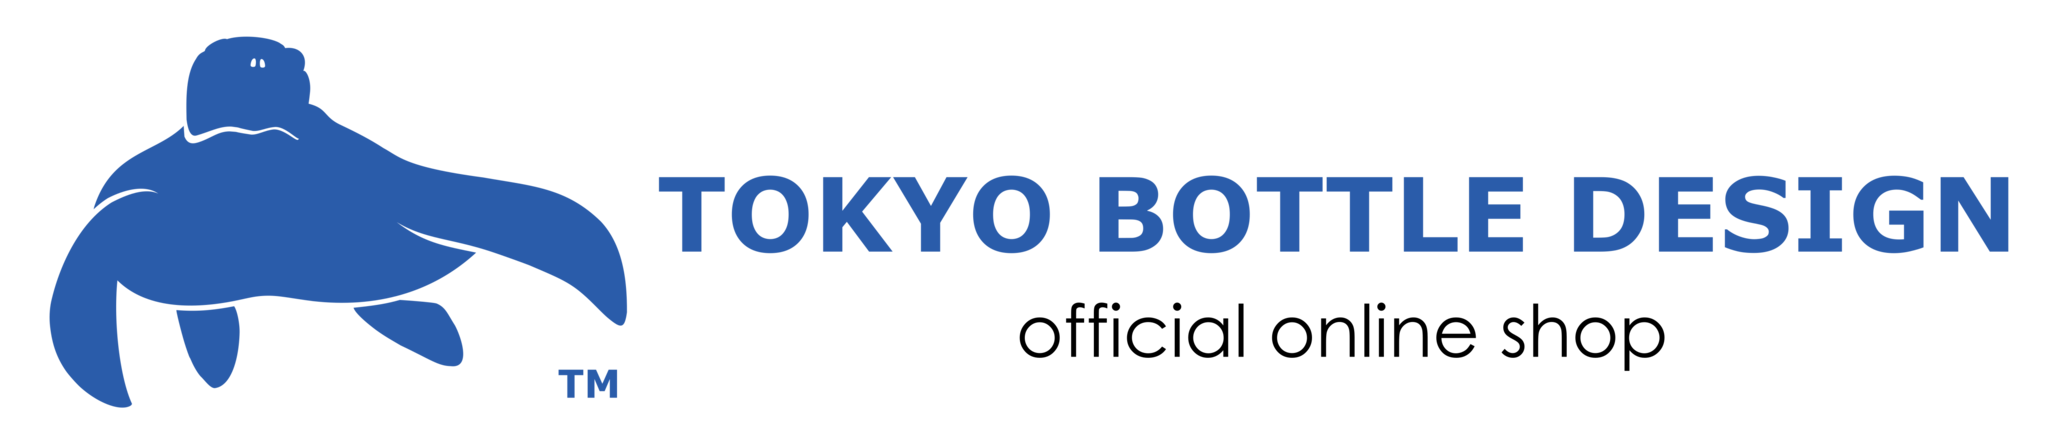 TOKYO BOTTLE DESIGN